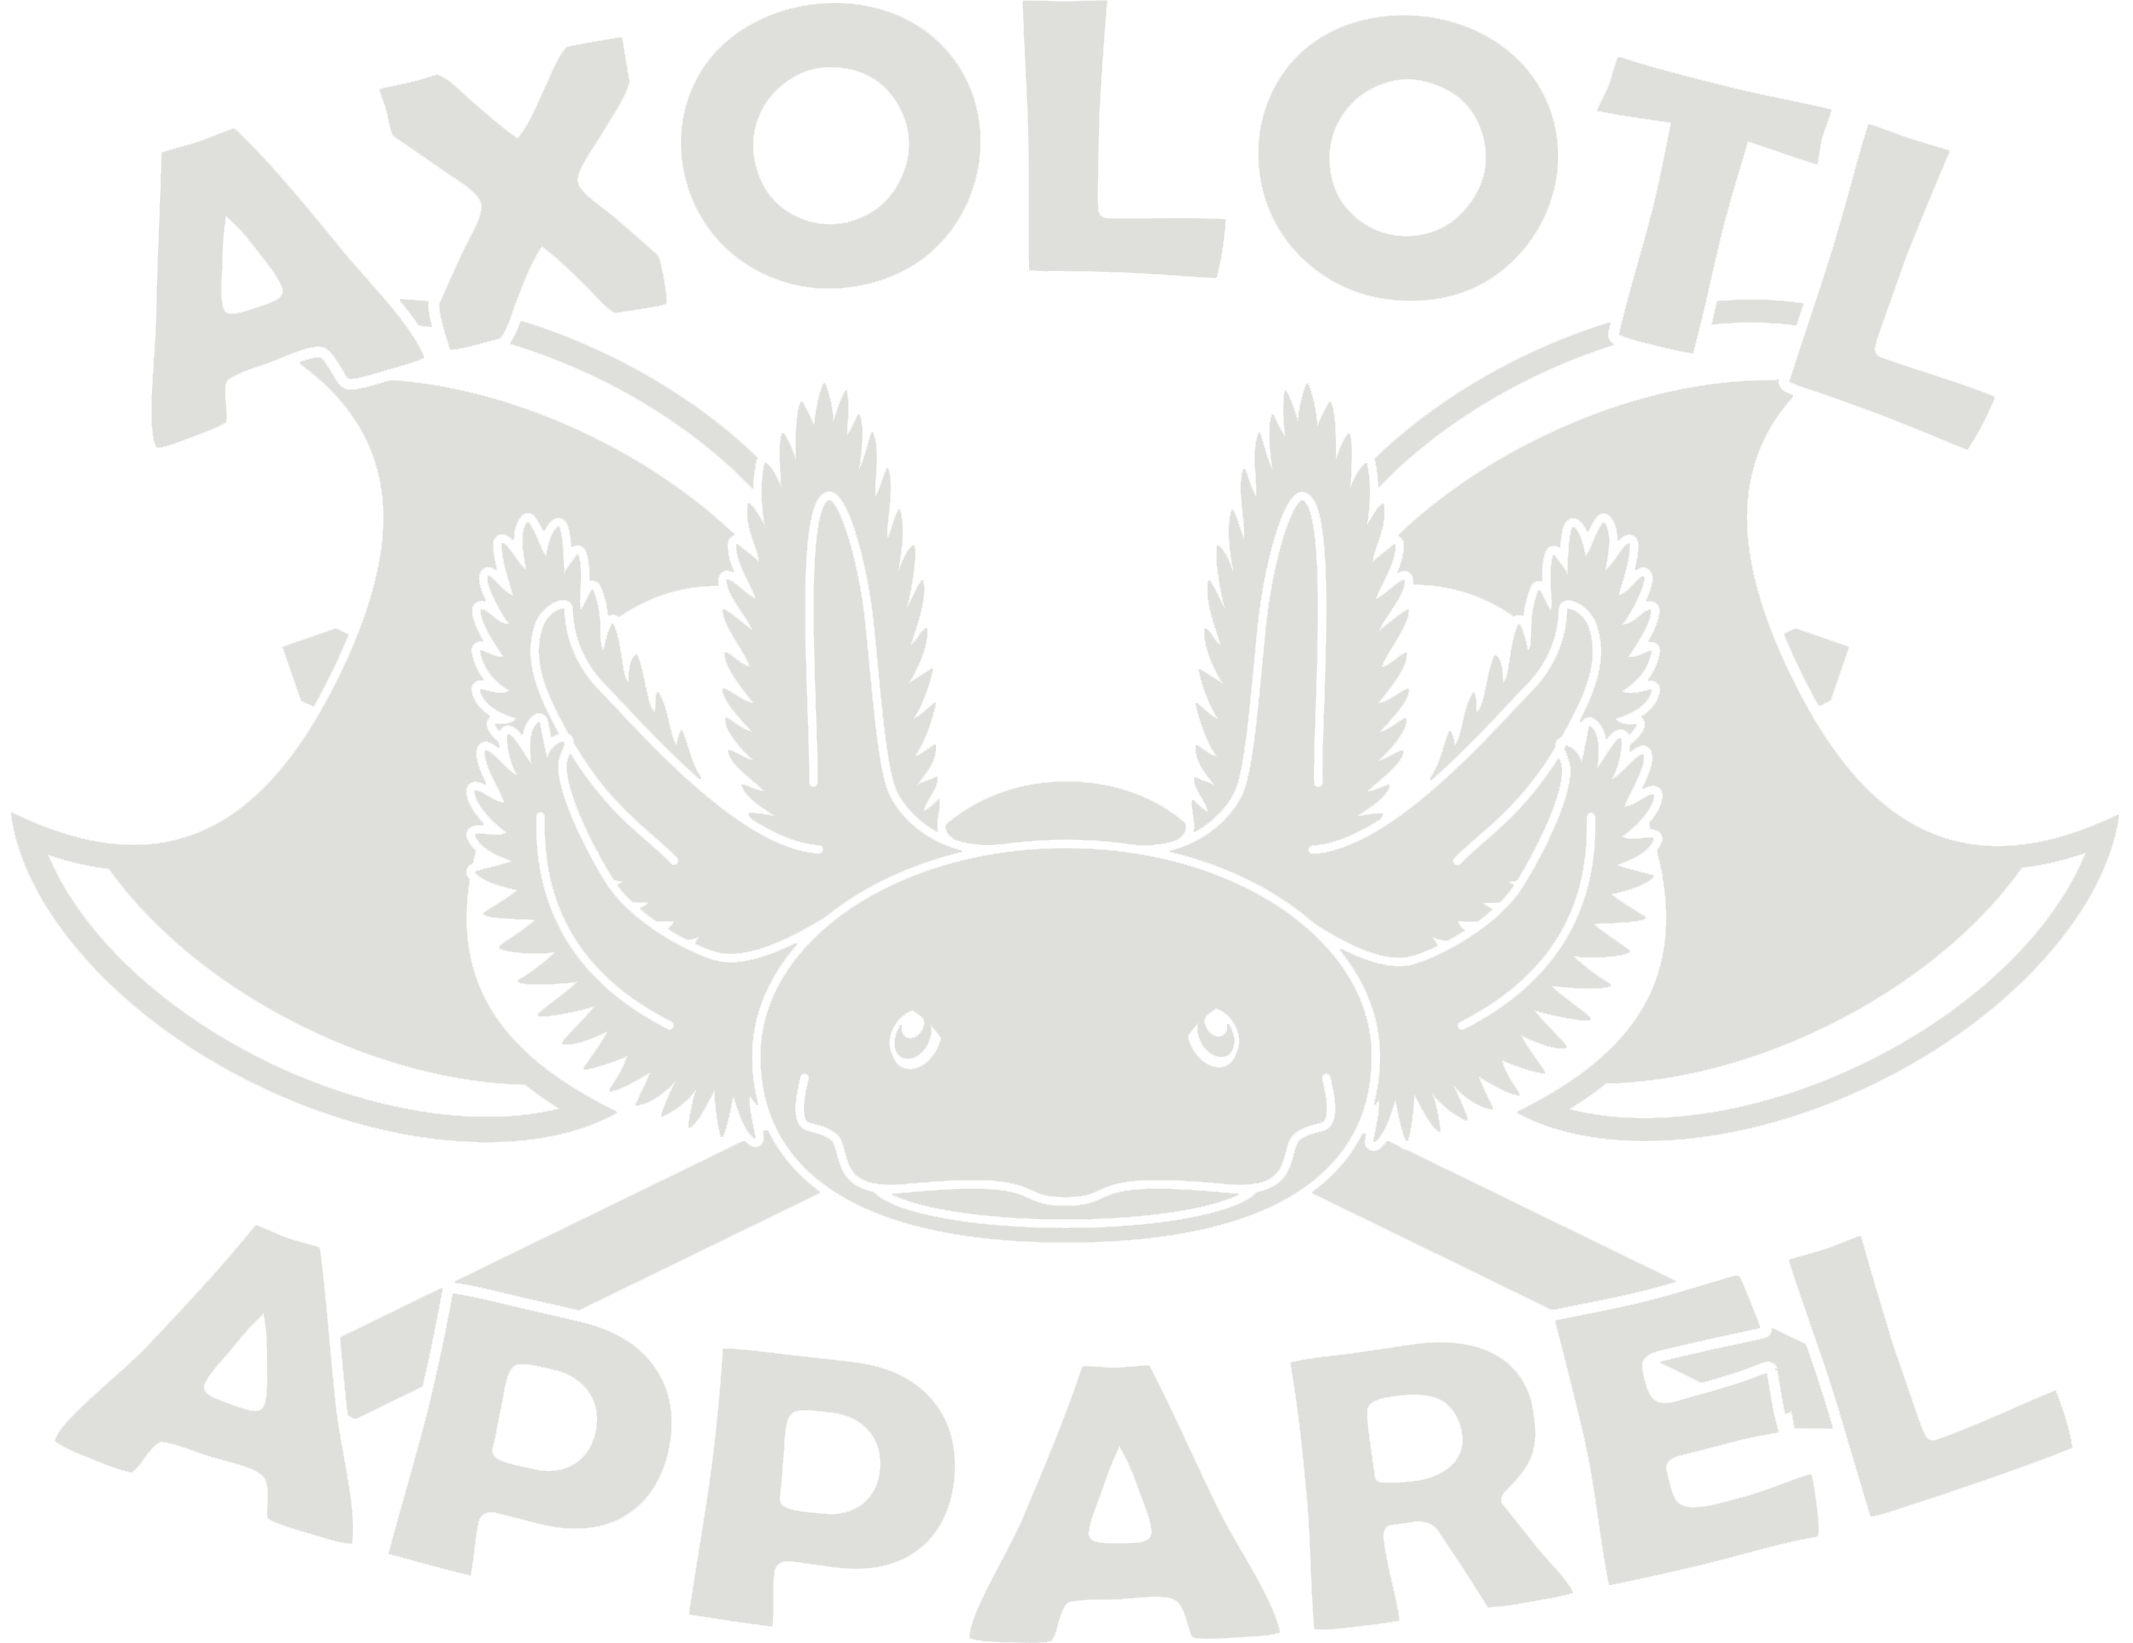 Axolotl Apparel